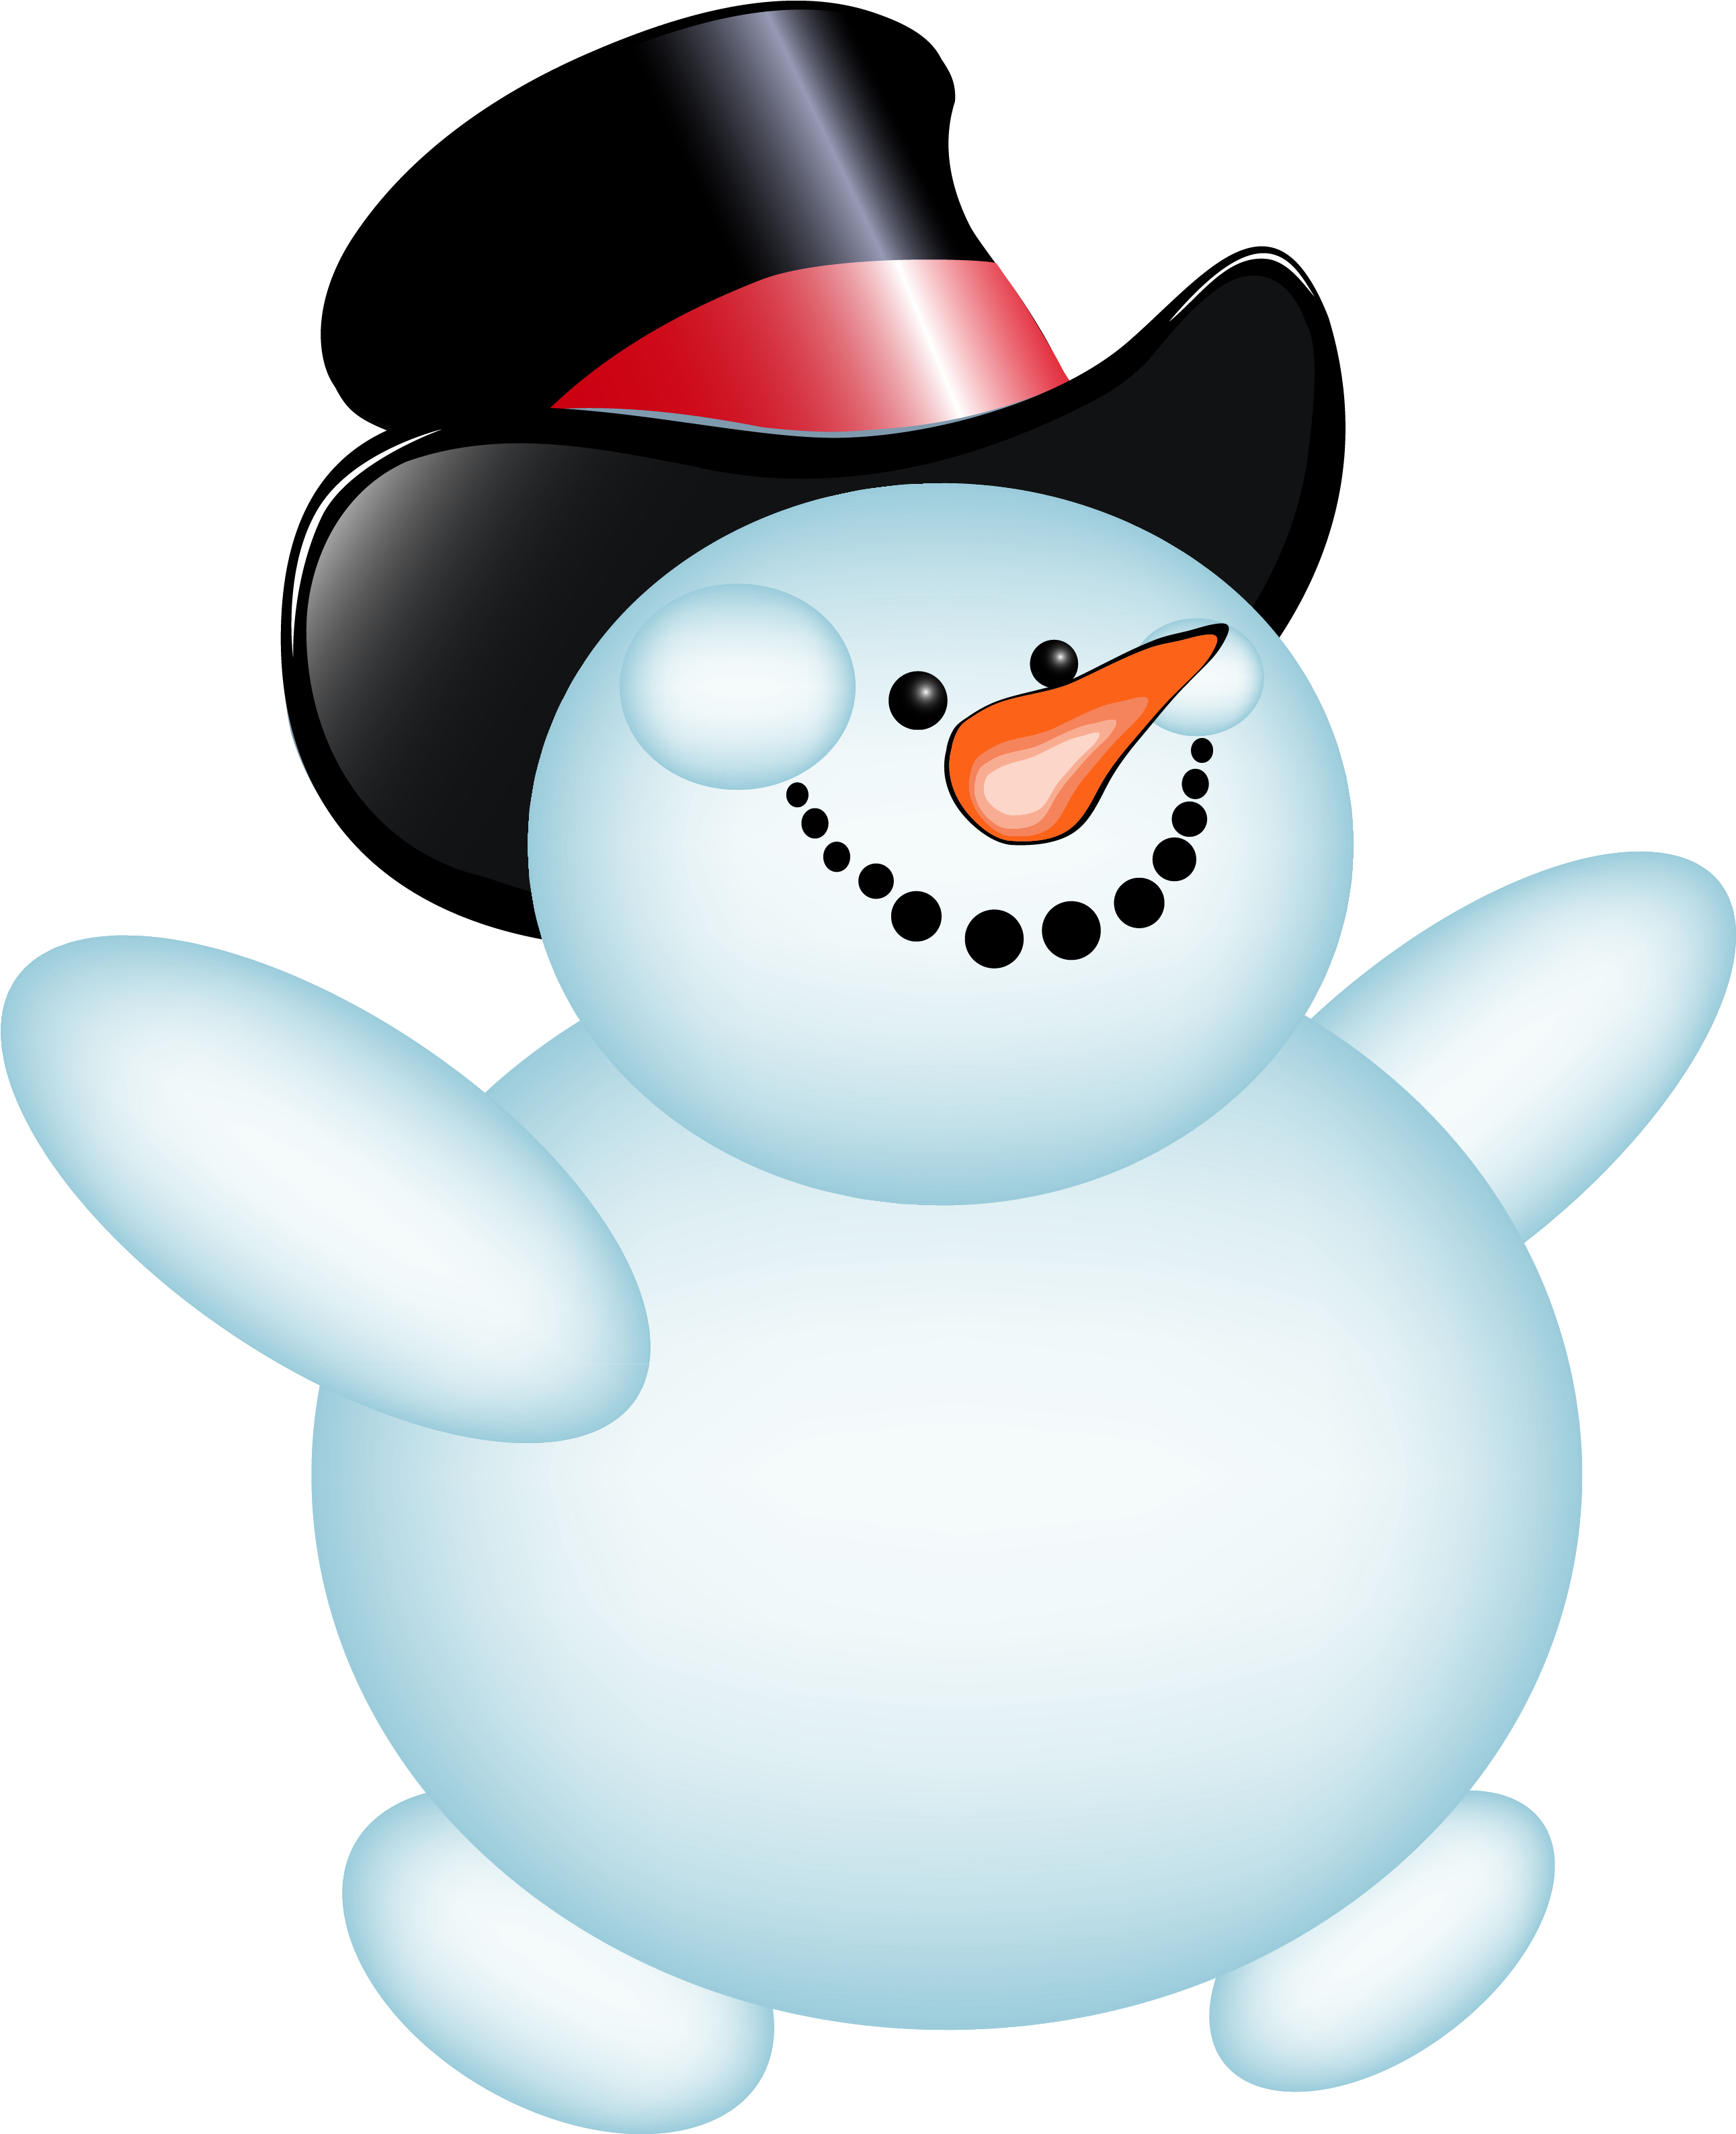 Snowman Clipart To Download Pdclipart Snowman Clipart No